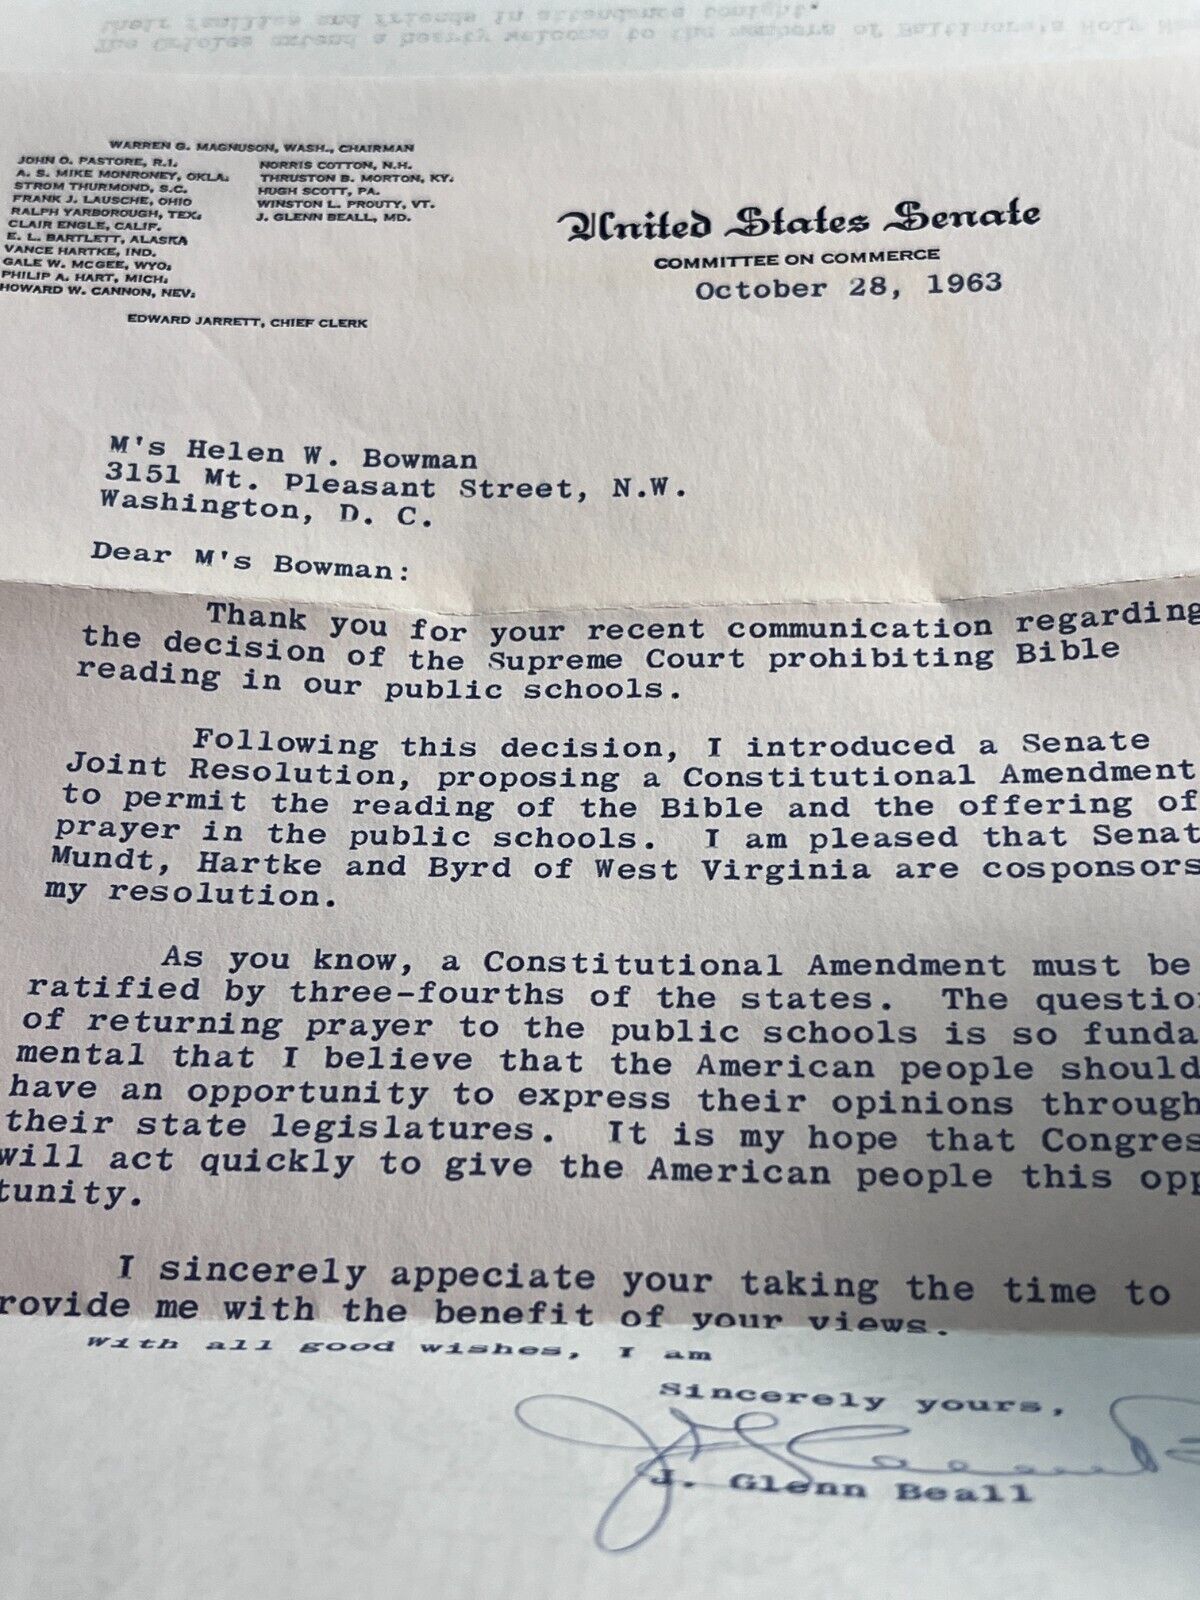 1963 US Senate letter concerning Bible reading in school, J. Glen Beall.